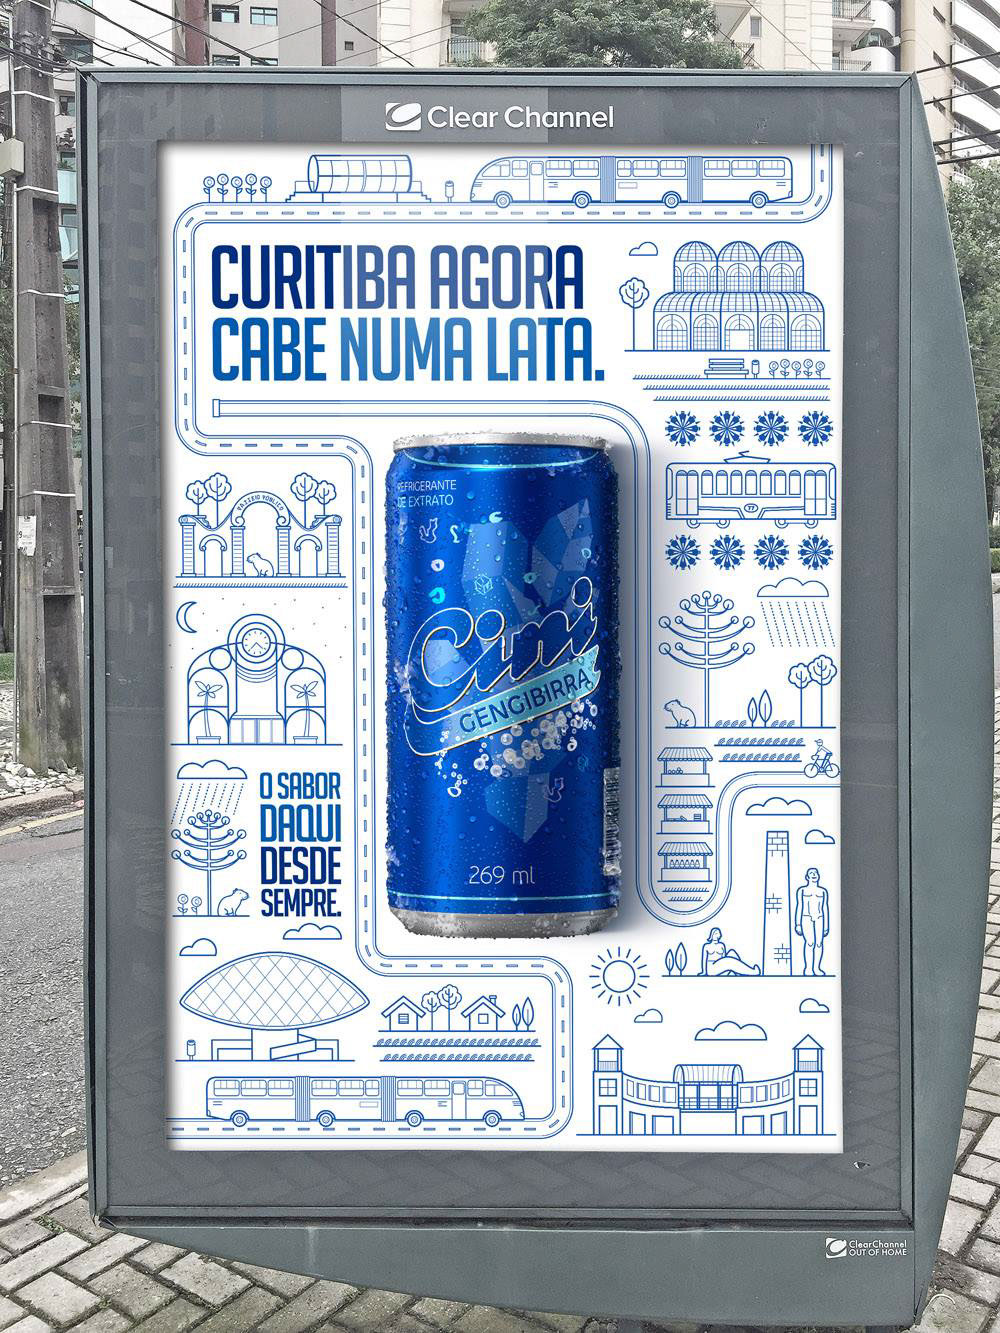 Curitiba MUB cini refrigerante soda Framboesa raspberry gengibirra CWB mon tourism Brazil softdrink Parana